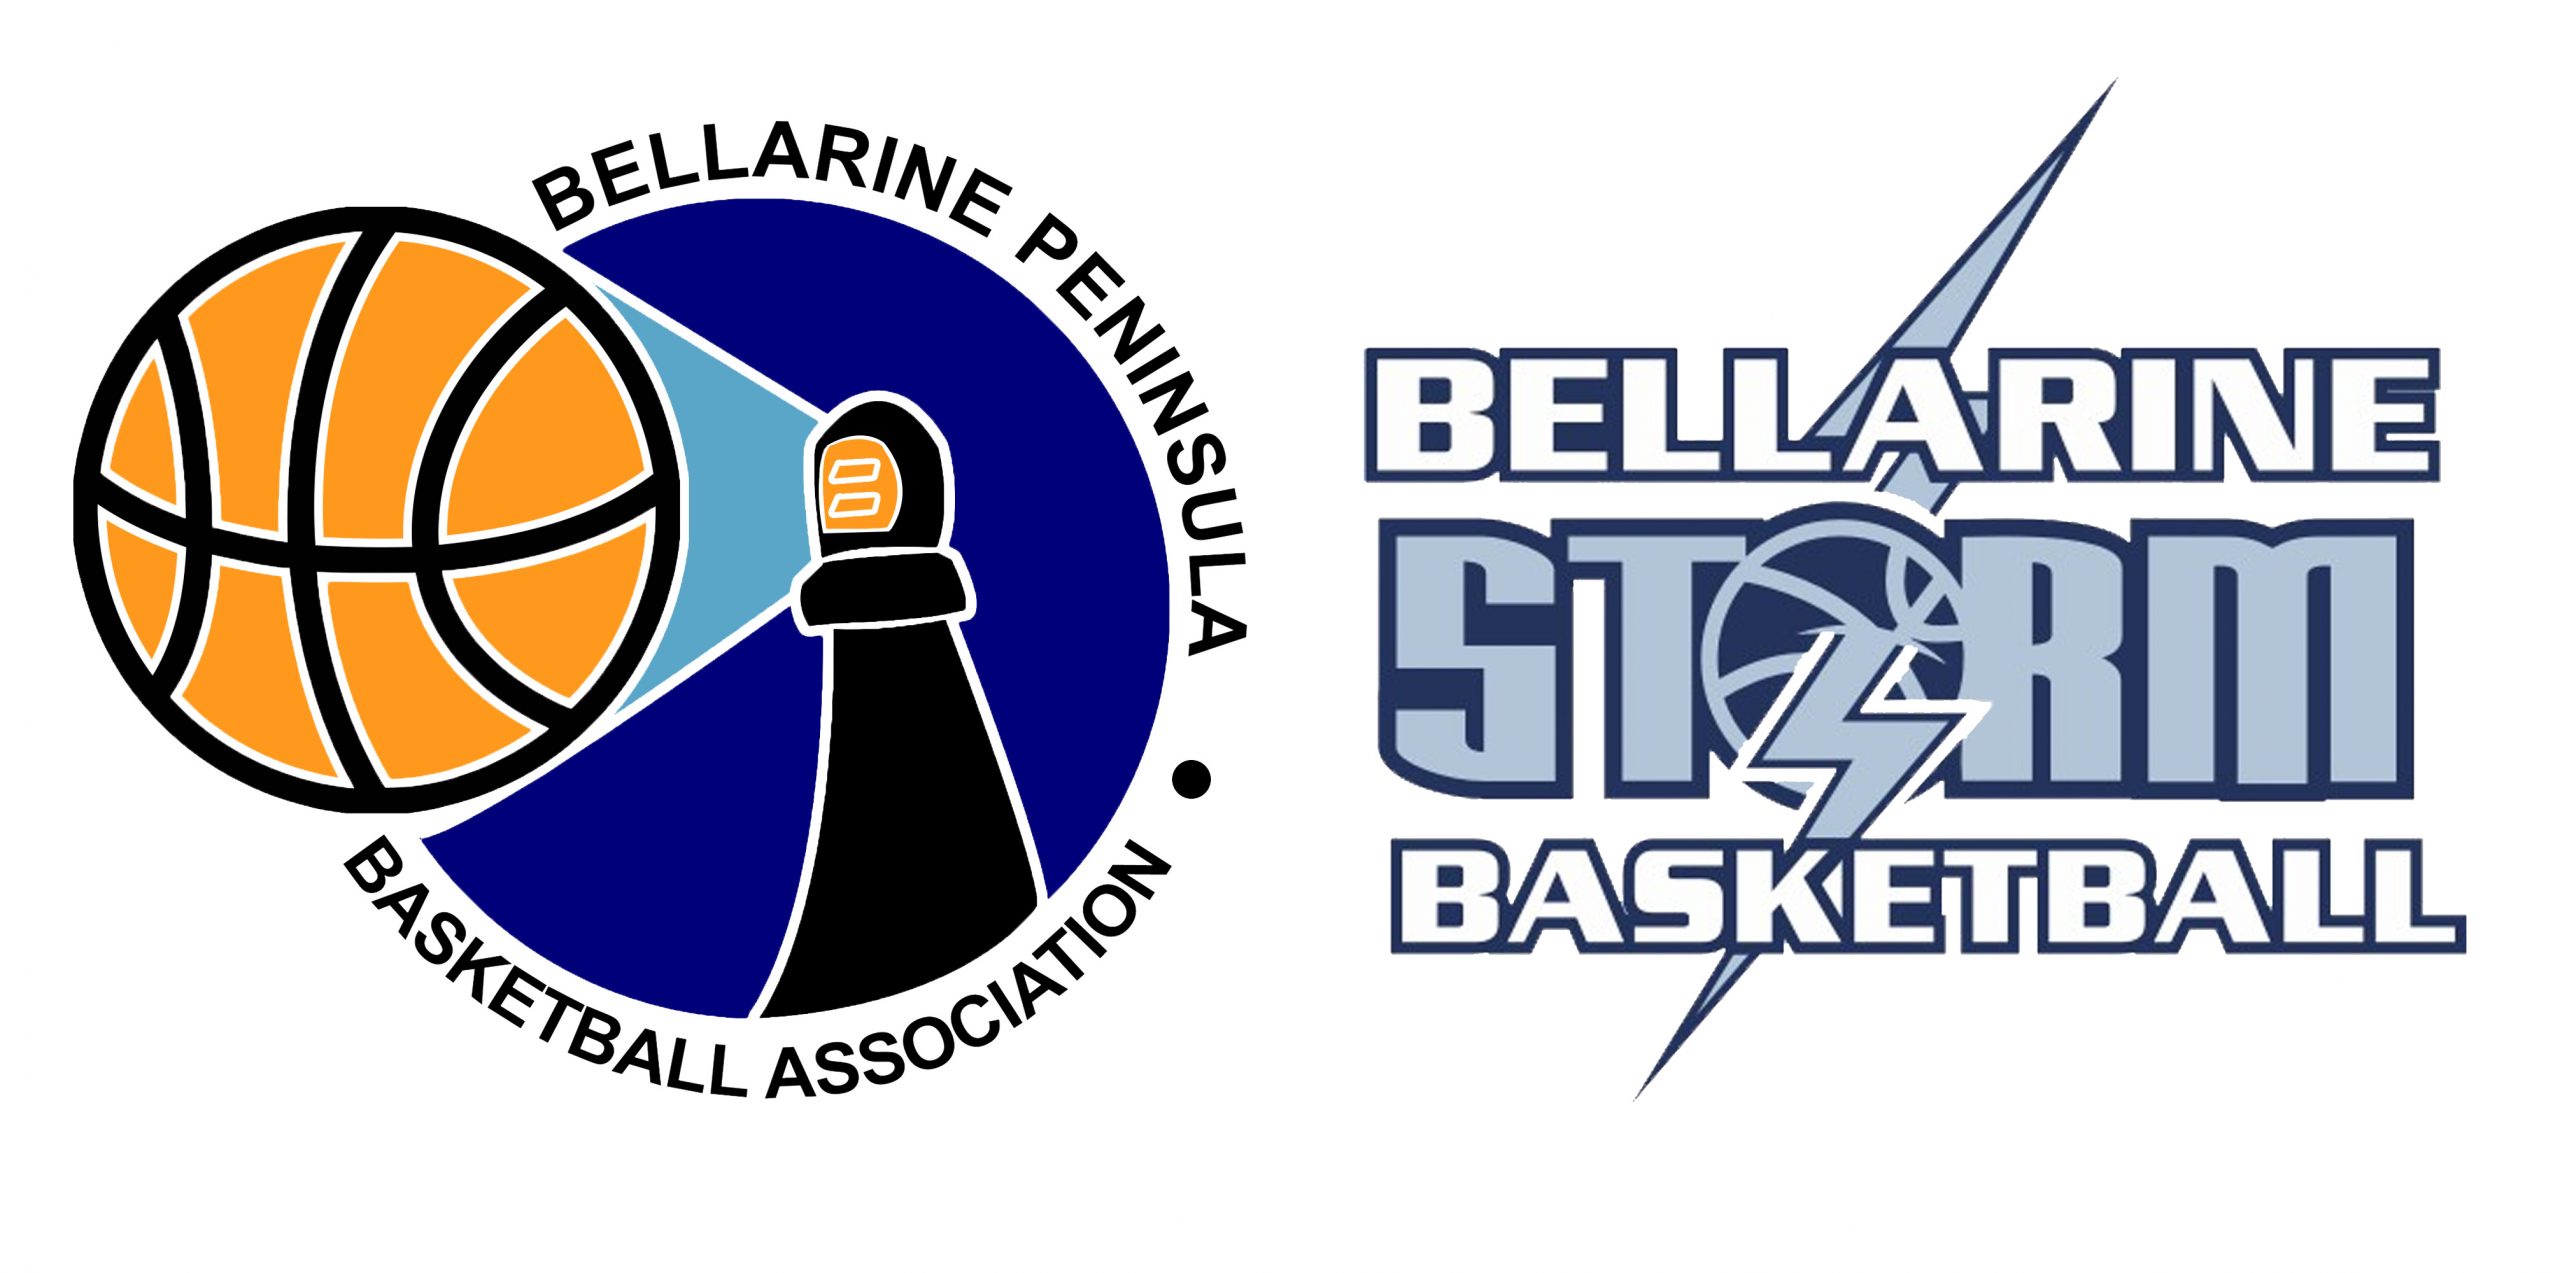 Bellarine Peninsula Basketball Association